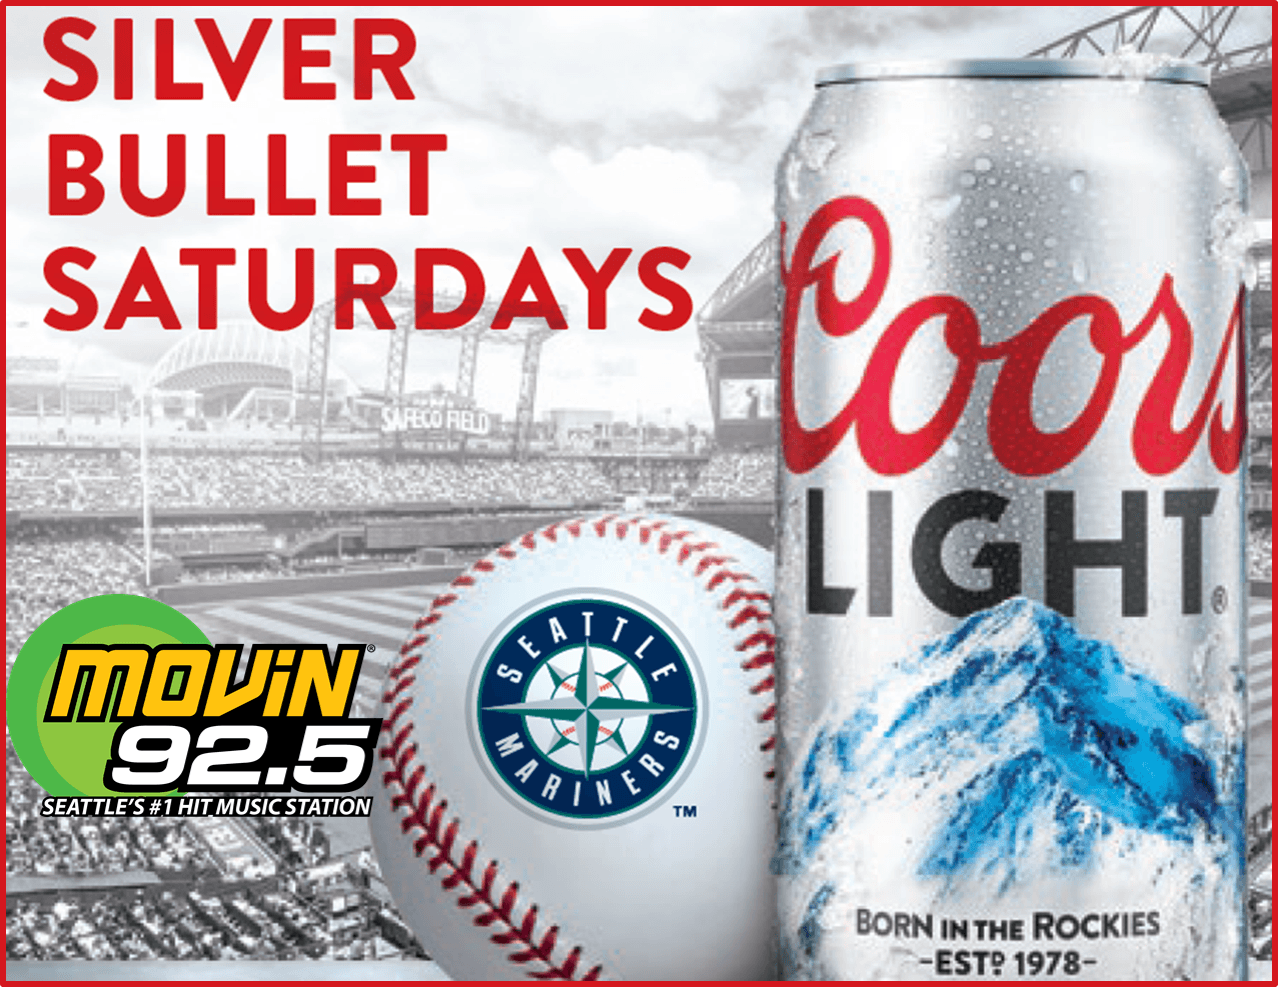 Silver Bullet Coors Light Logo - Silver Bullet Saturdays 92.5's Hit Music Station